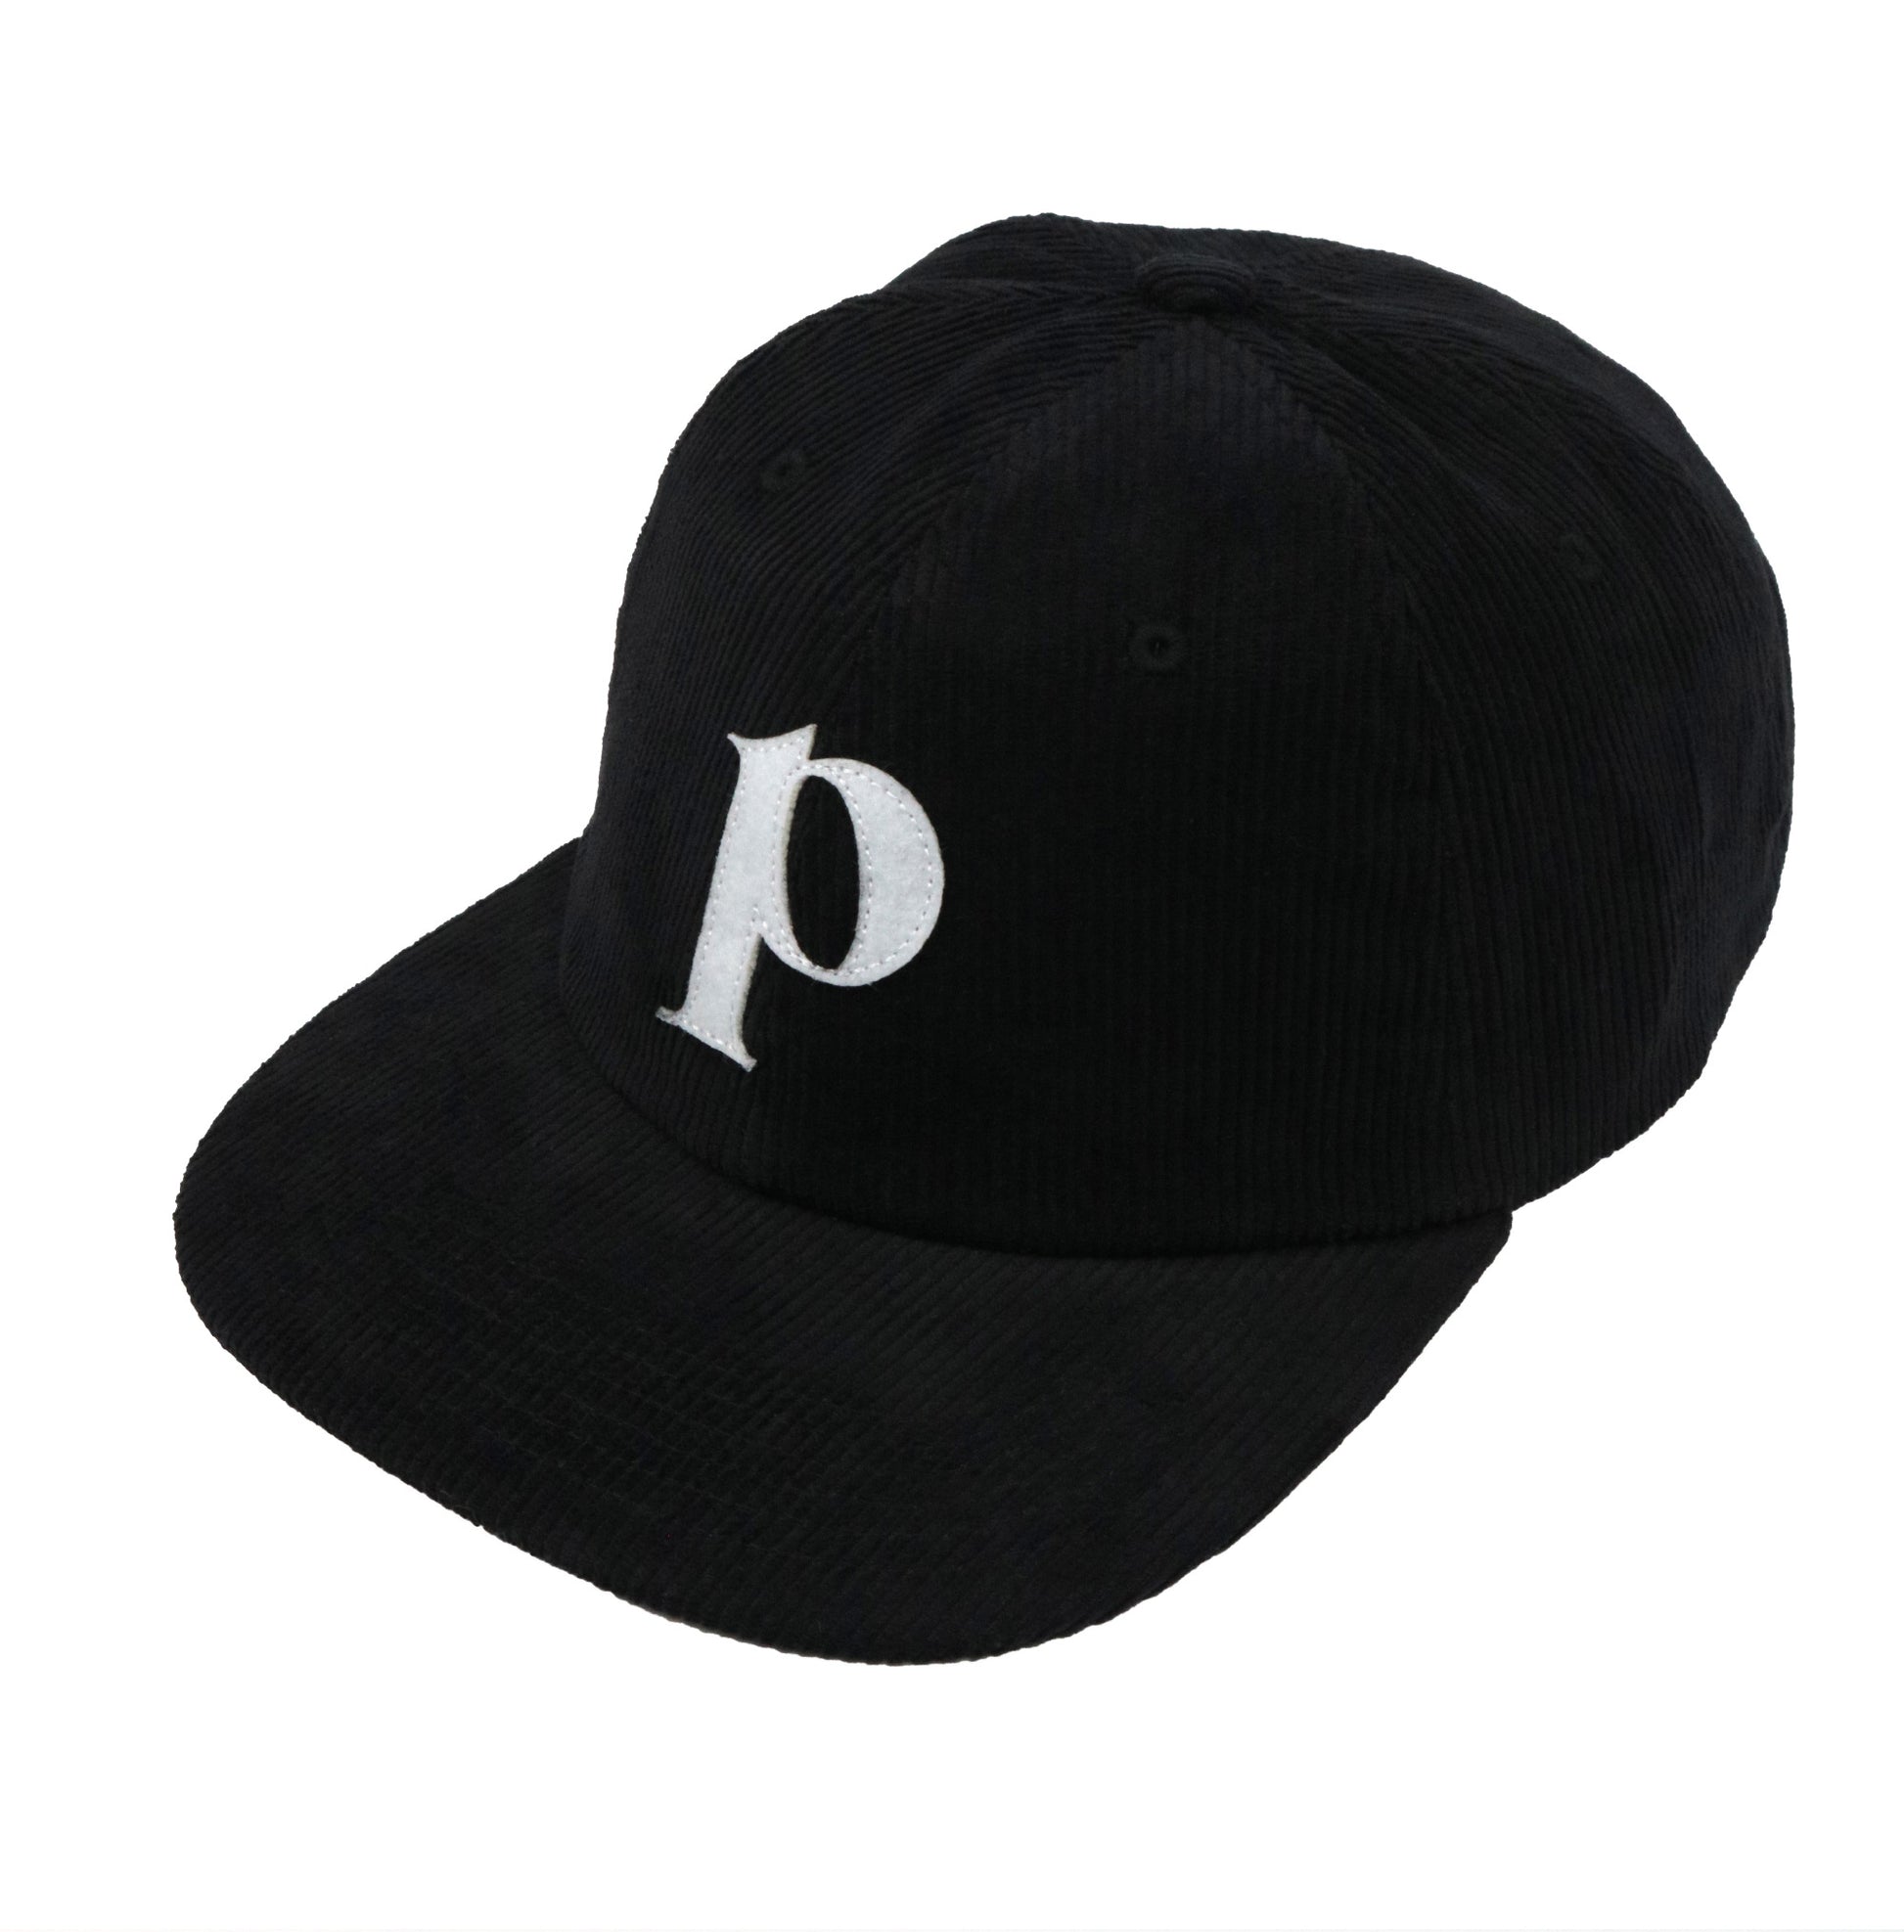 Black Corduroy Hat | Corduroy Fitted Hat | PNRM